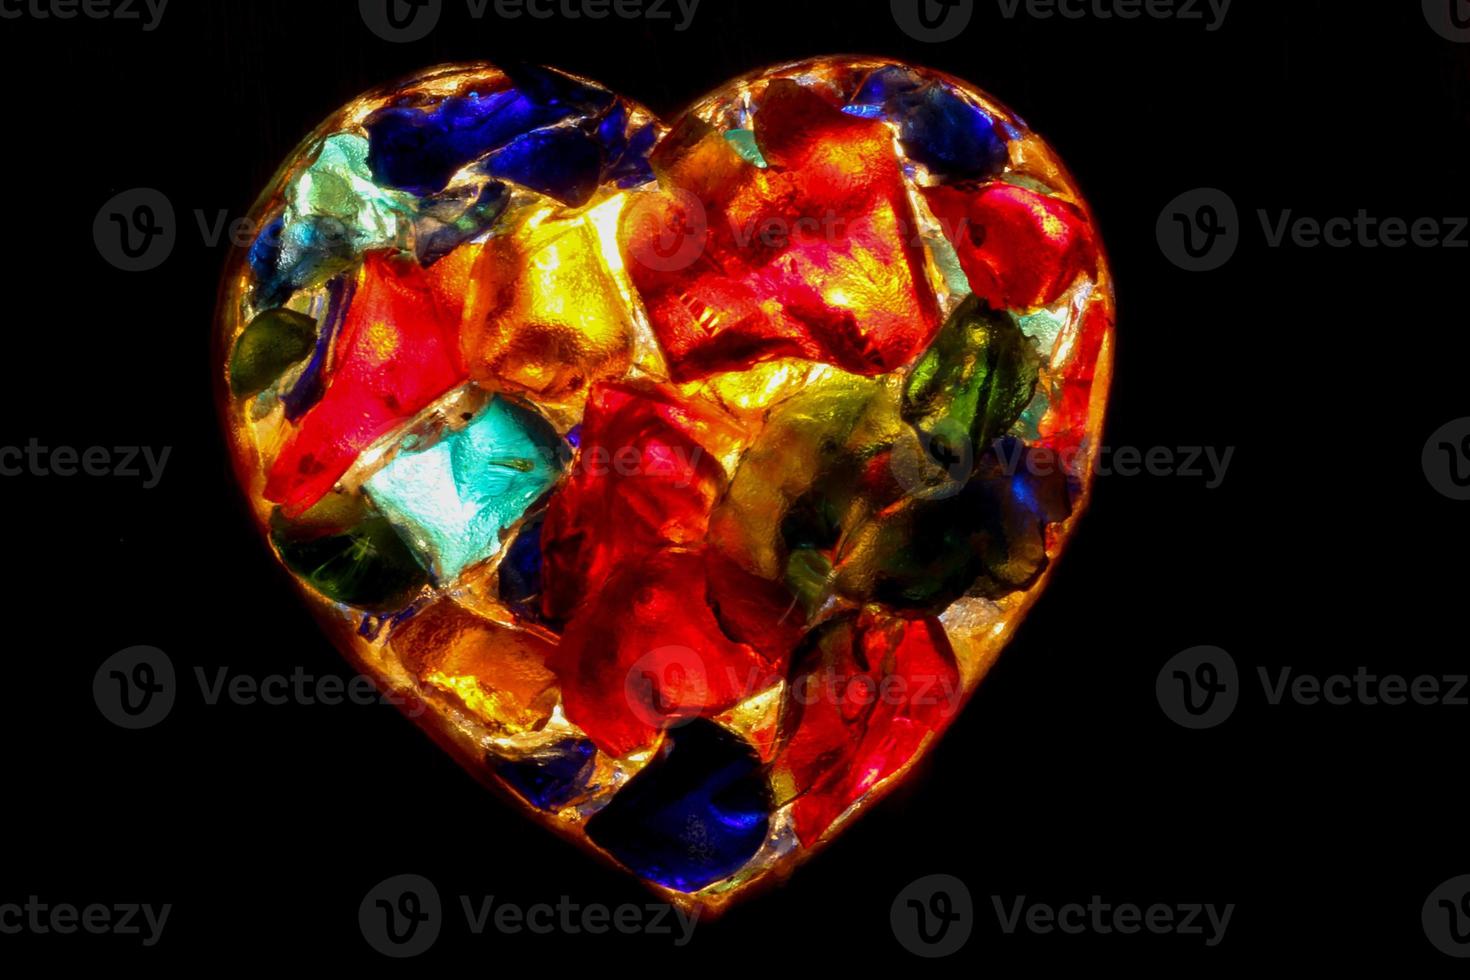 corazón - primer plano de vidrieras retroiluminadas foto